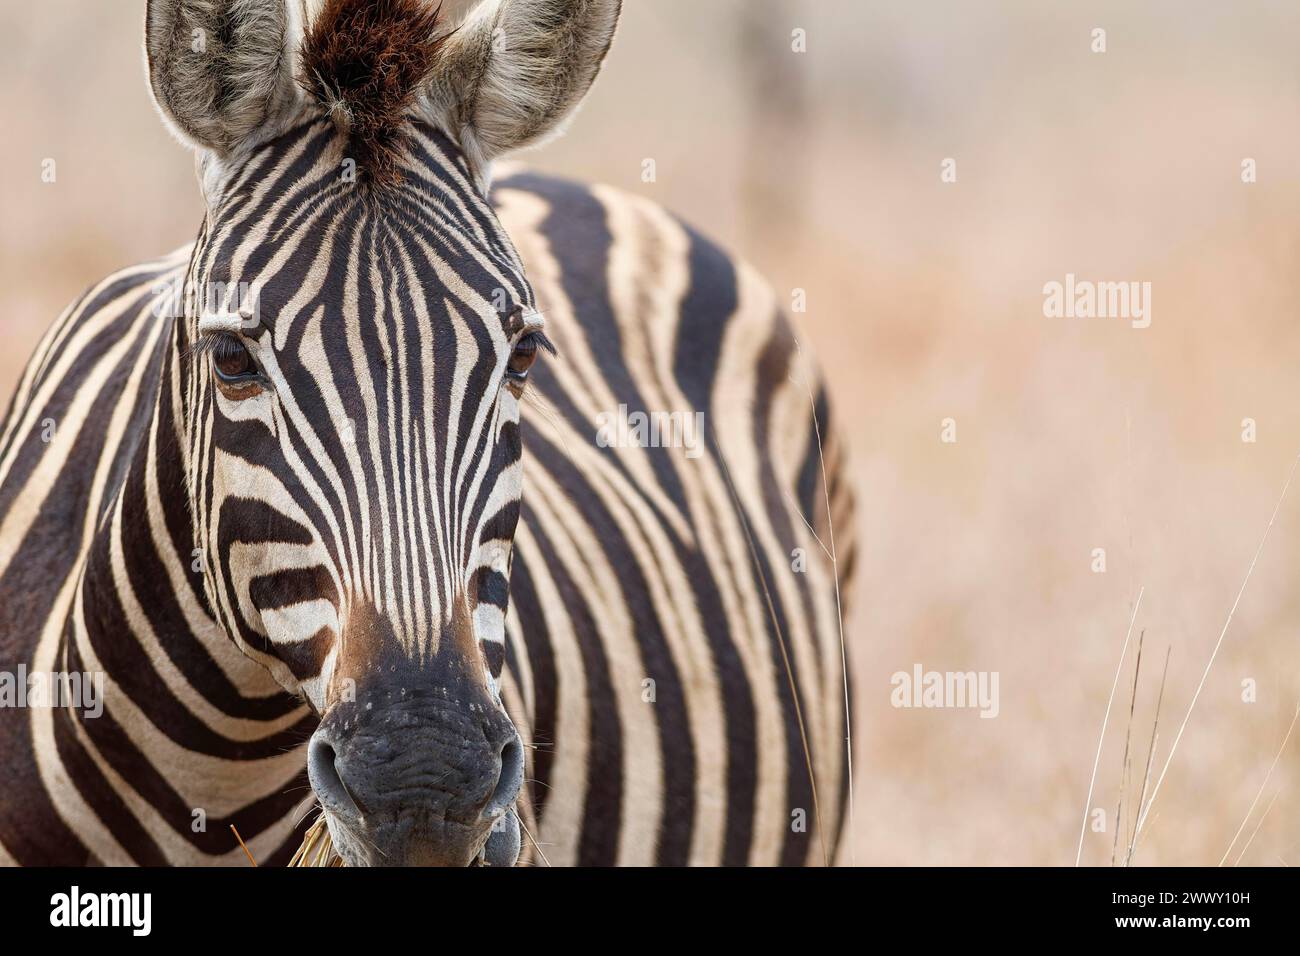 Burchell's Zebra (Equus quagga burchellii), erwachsenes Futter auf trockenem Gras, Nahaufnahme des Kopfes, Tierporträt, Kruger-Nationalpark, Südafrika, Afrika Stockfoto